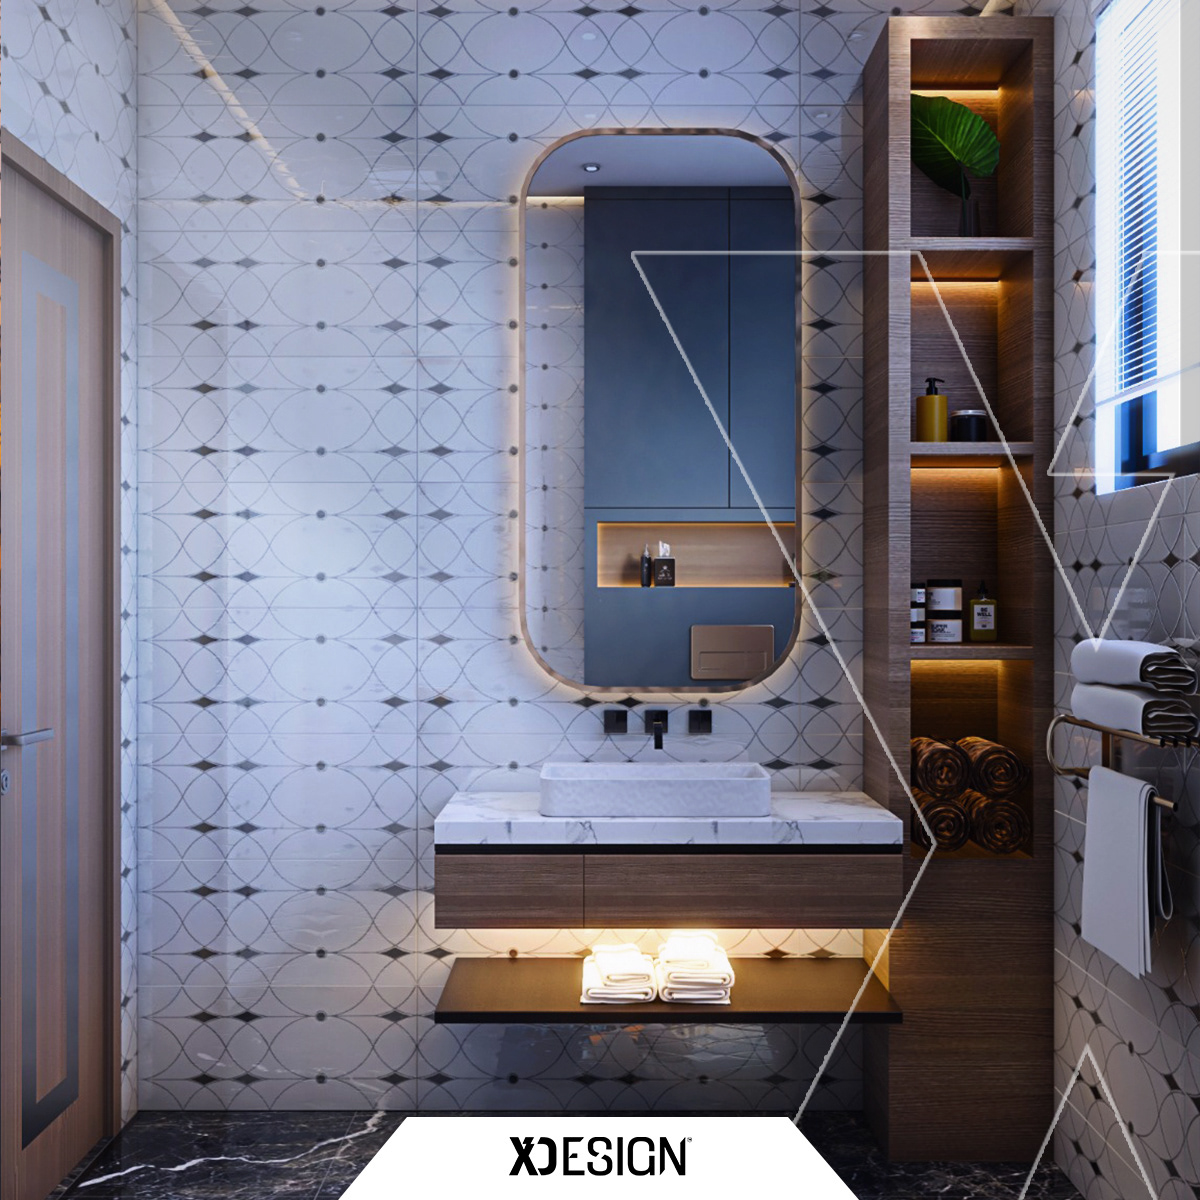 indoor architecture vray 3ds max bathroom Interior design xdesign Behance